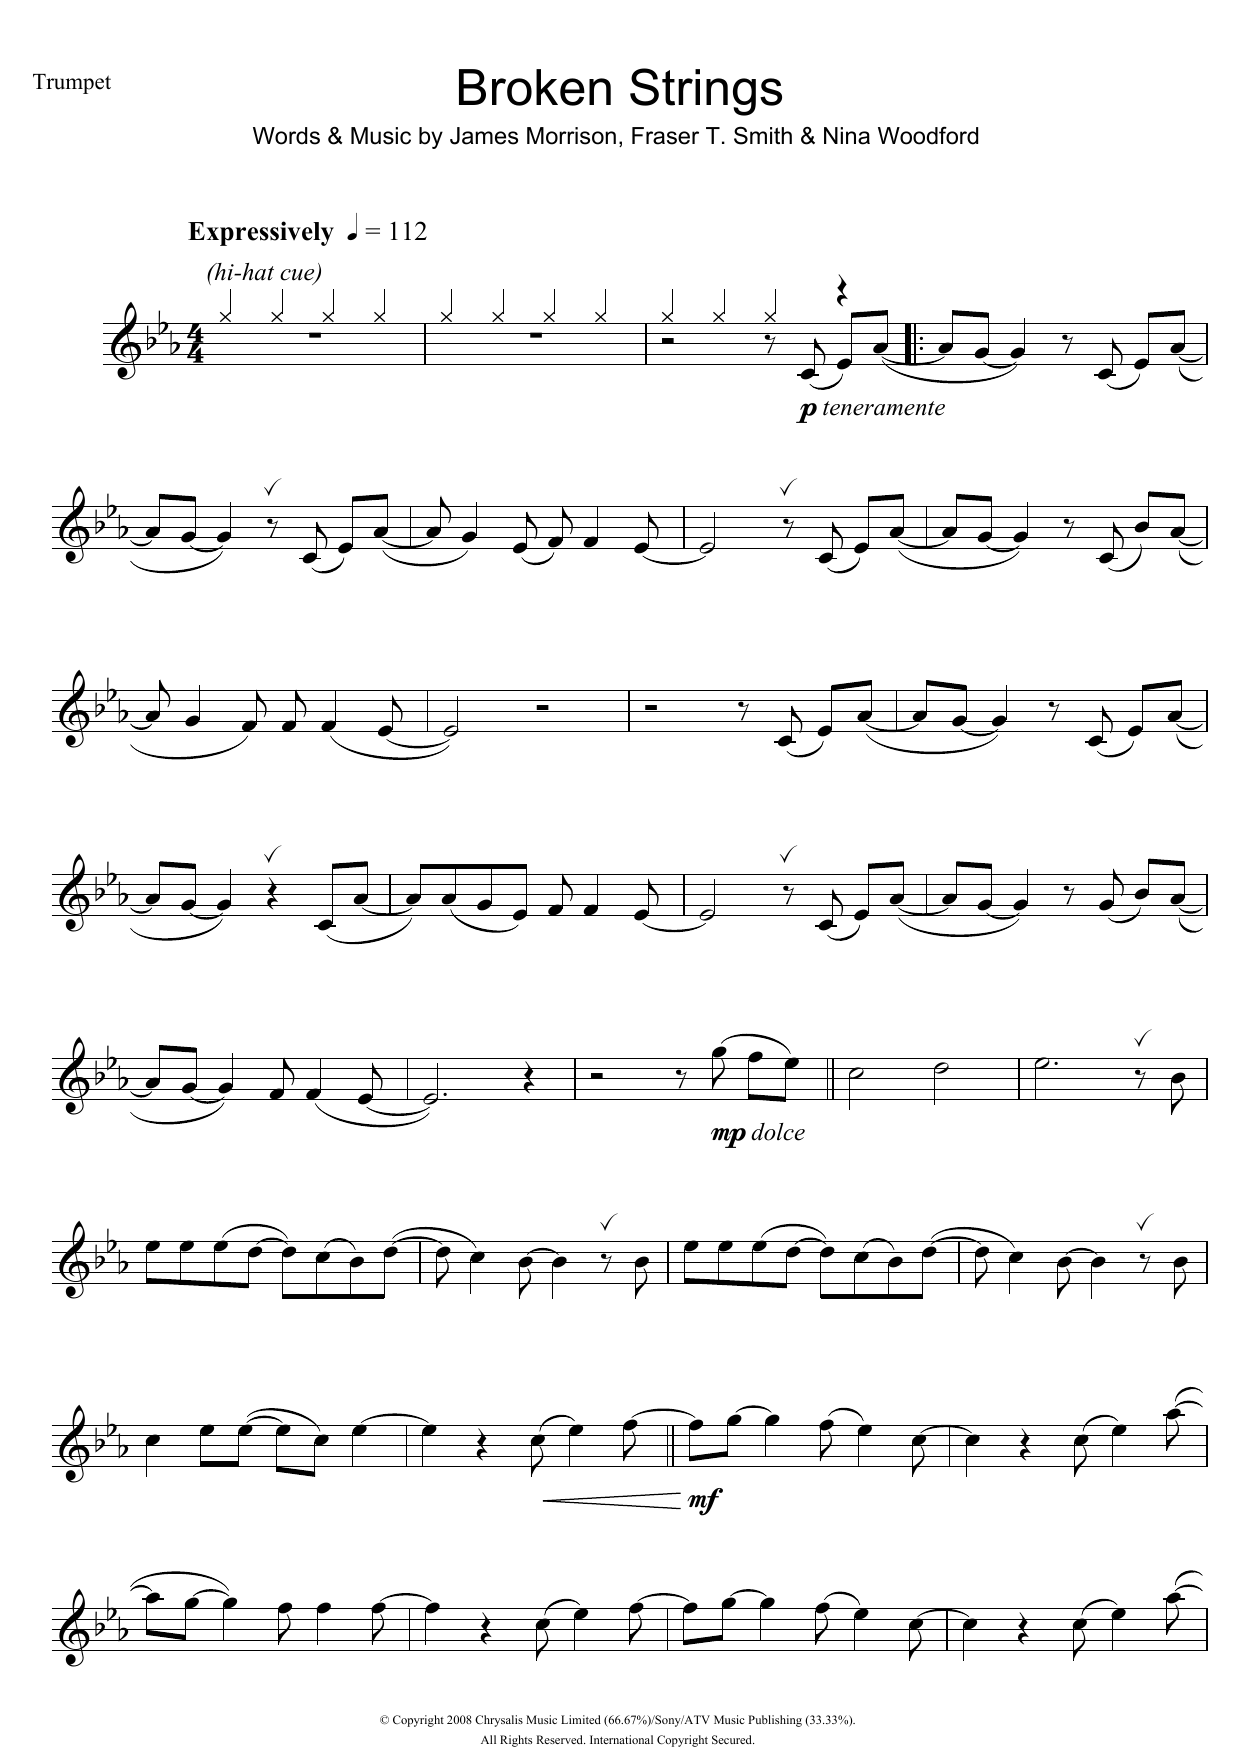 James Morrison Broken Strings Sheet Music Notes & Chords for Alto Saxophone - Download or Print PDF